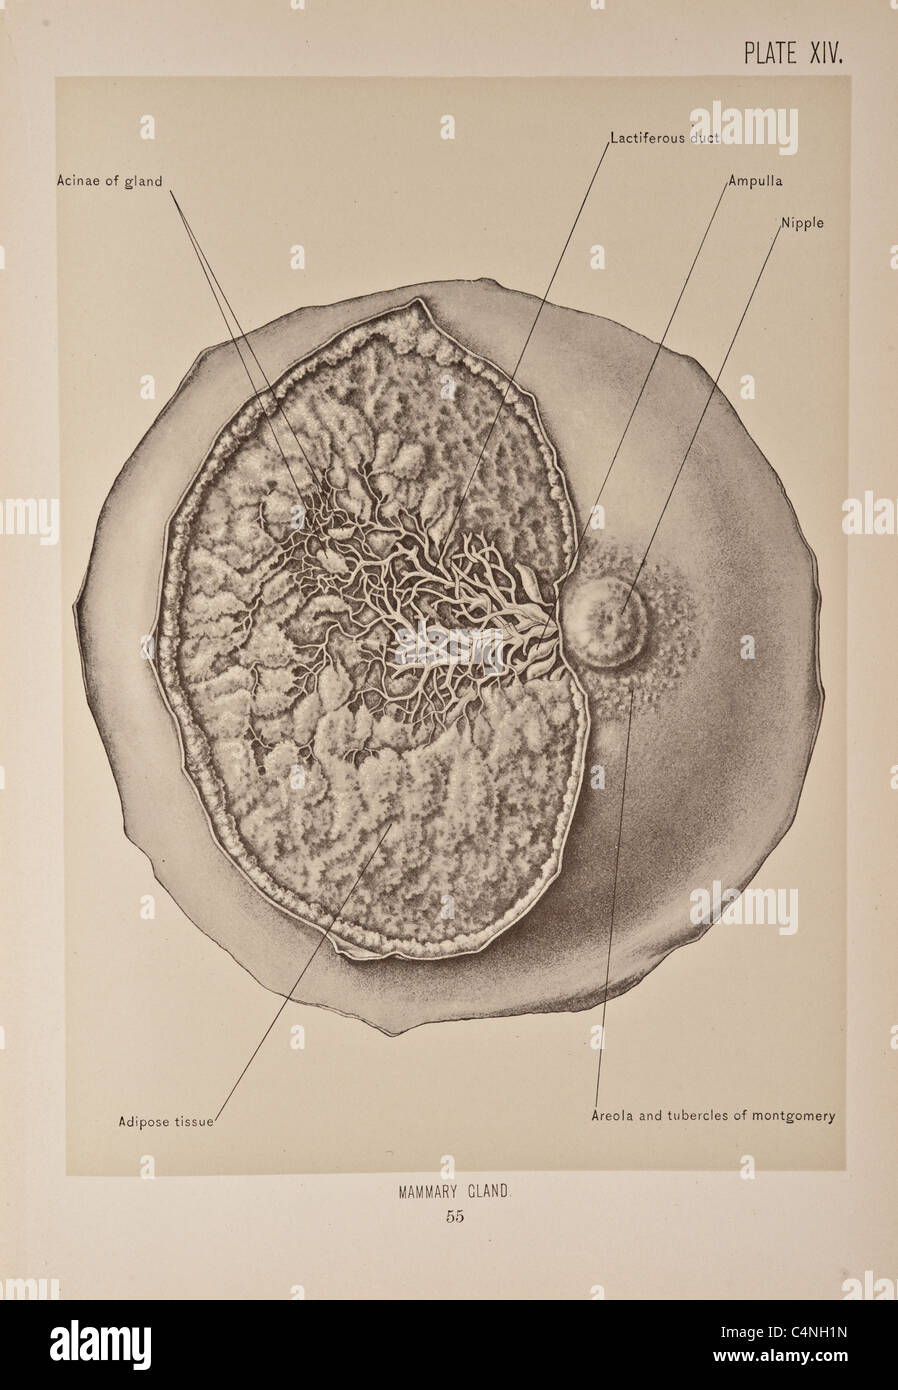 John B Deaver Surgical Anatomy copyright 1899 Stock Photo